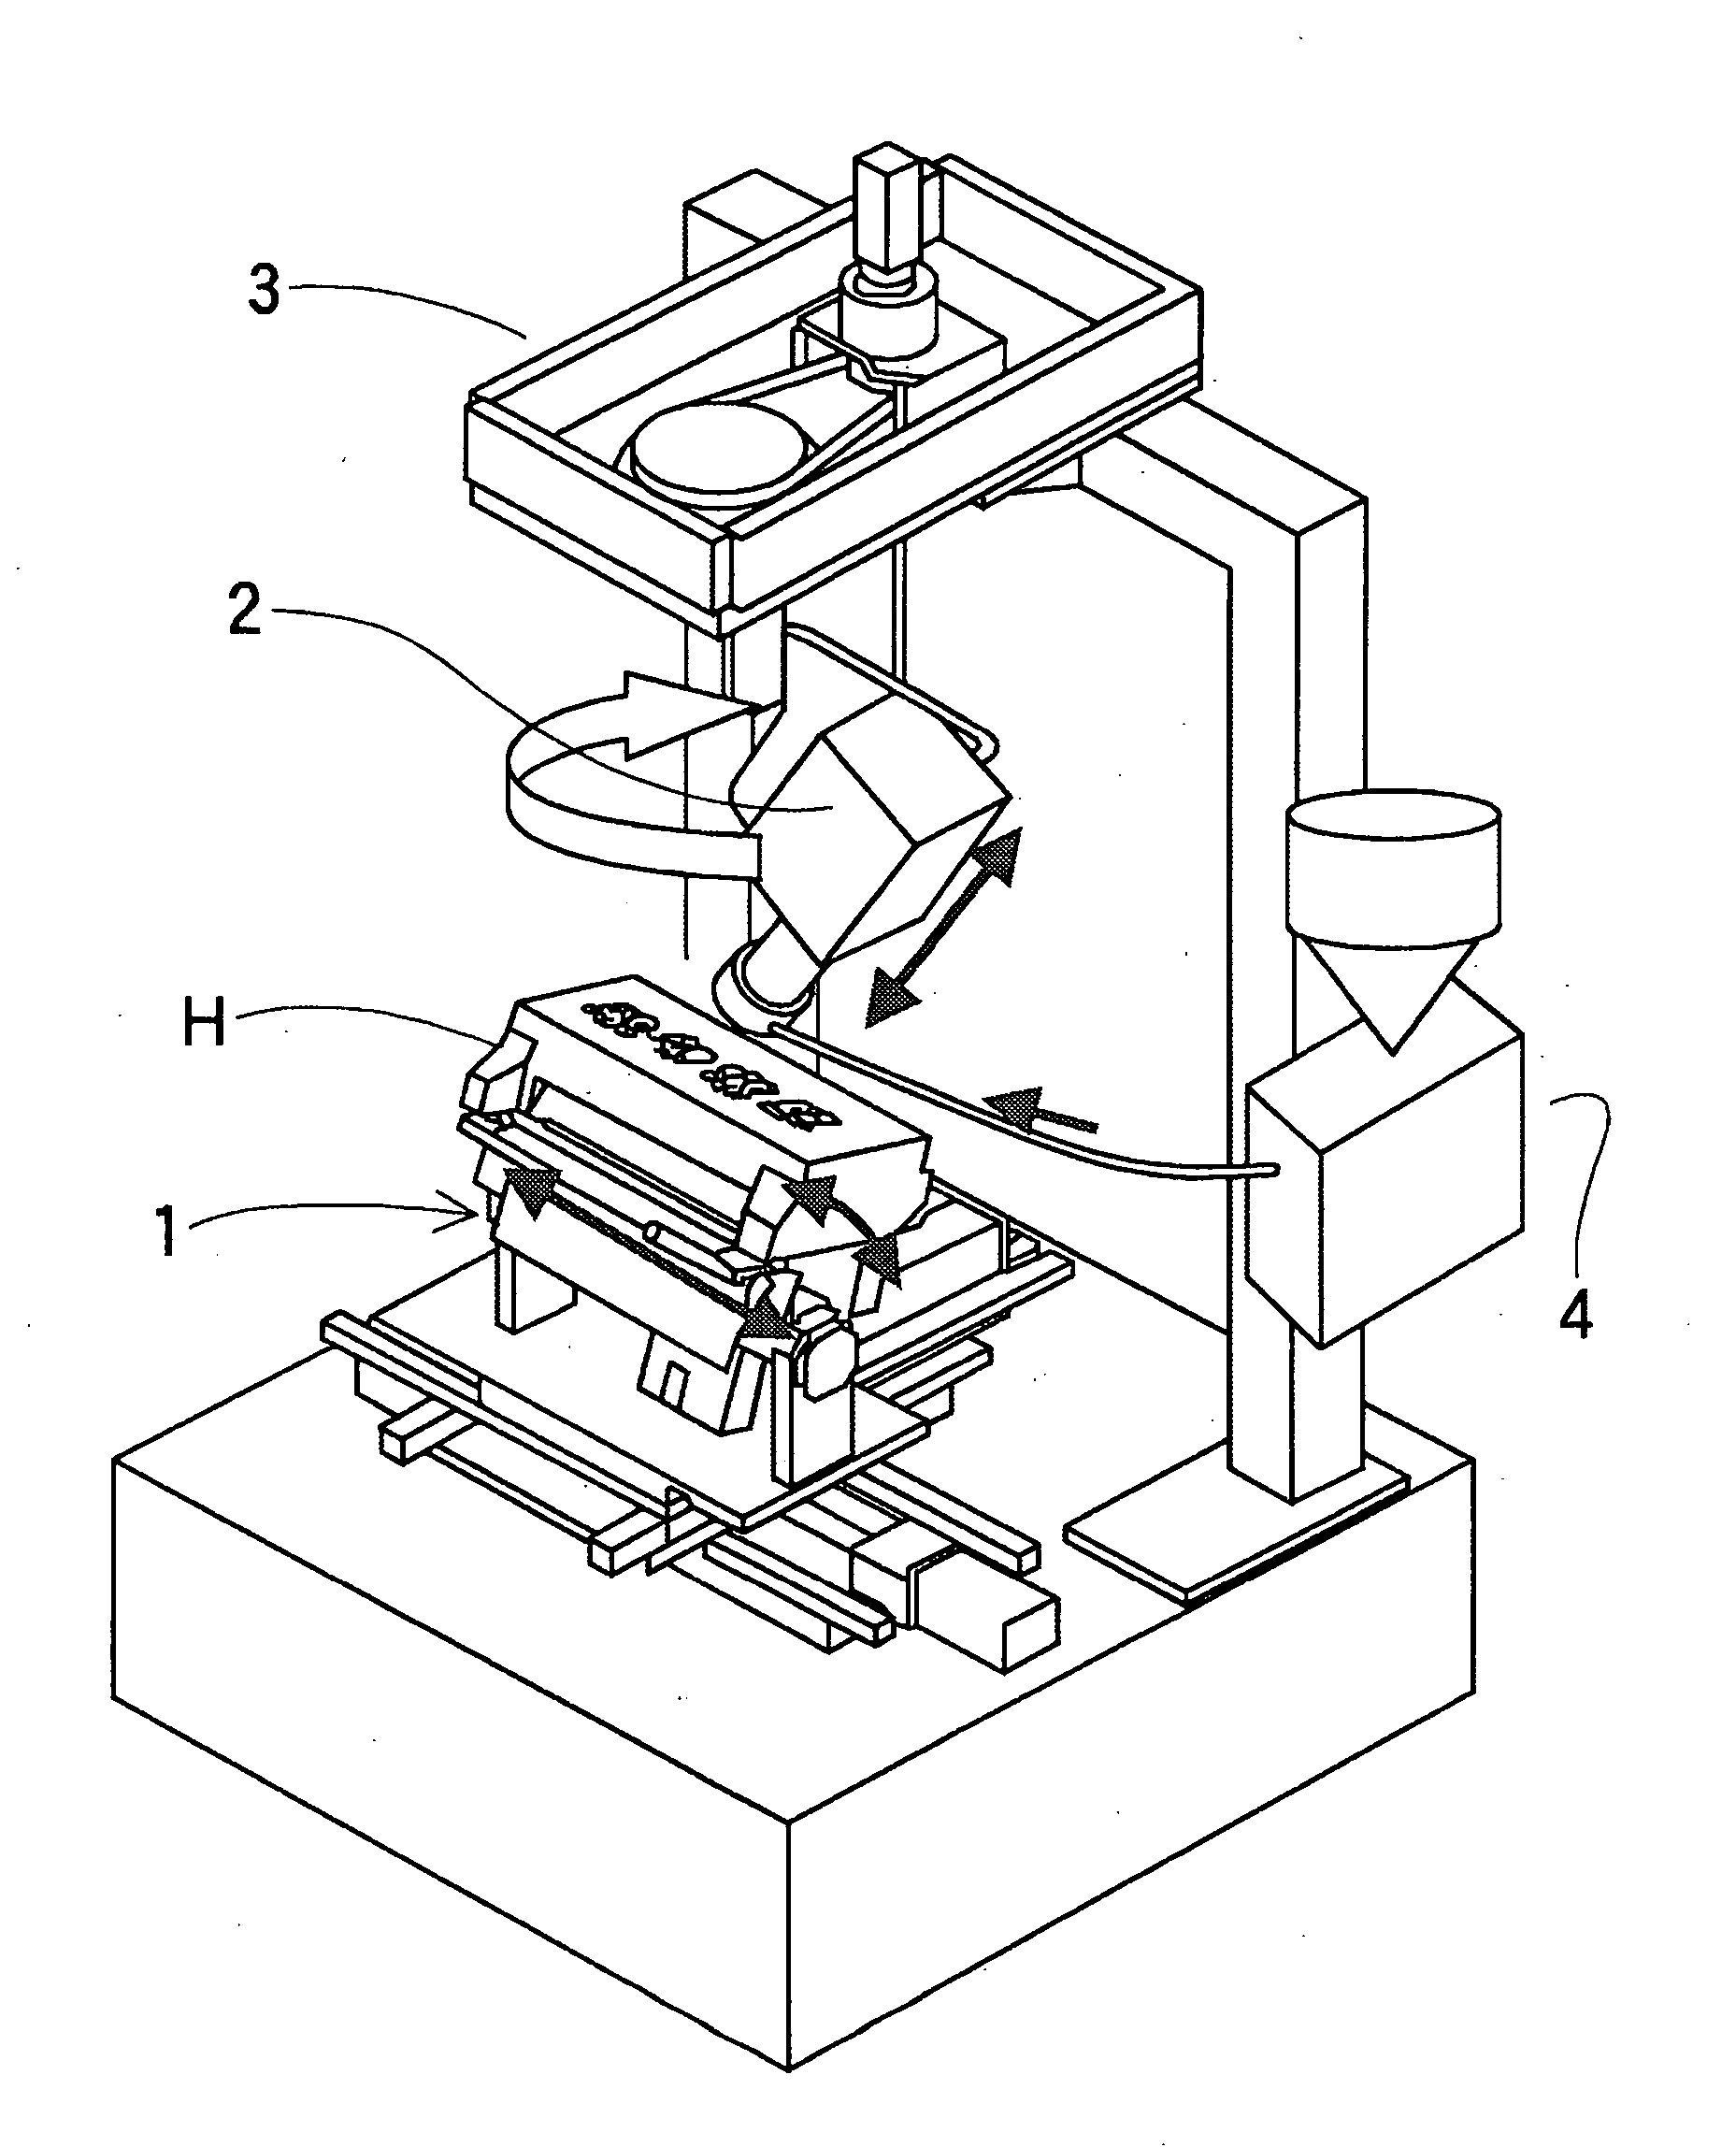 Laser cladding apparatus and method